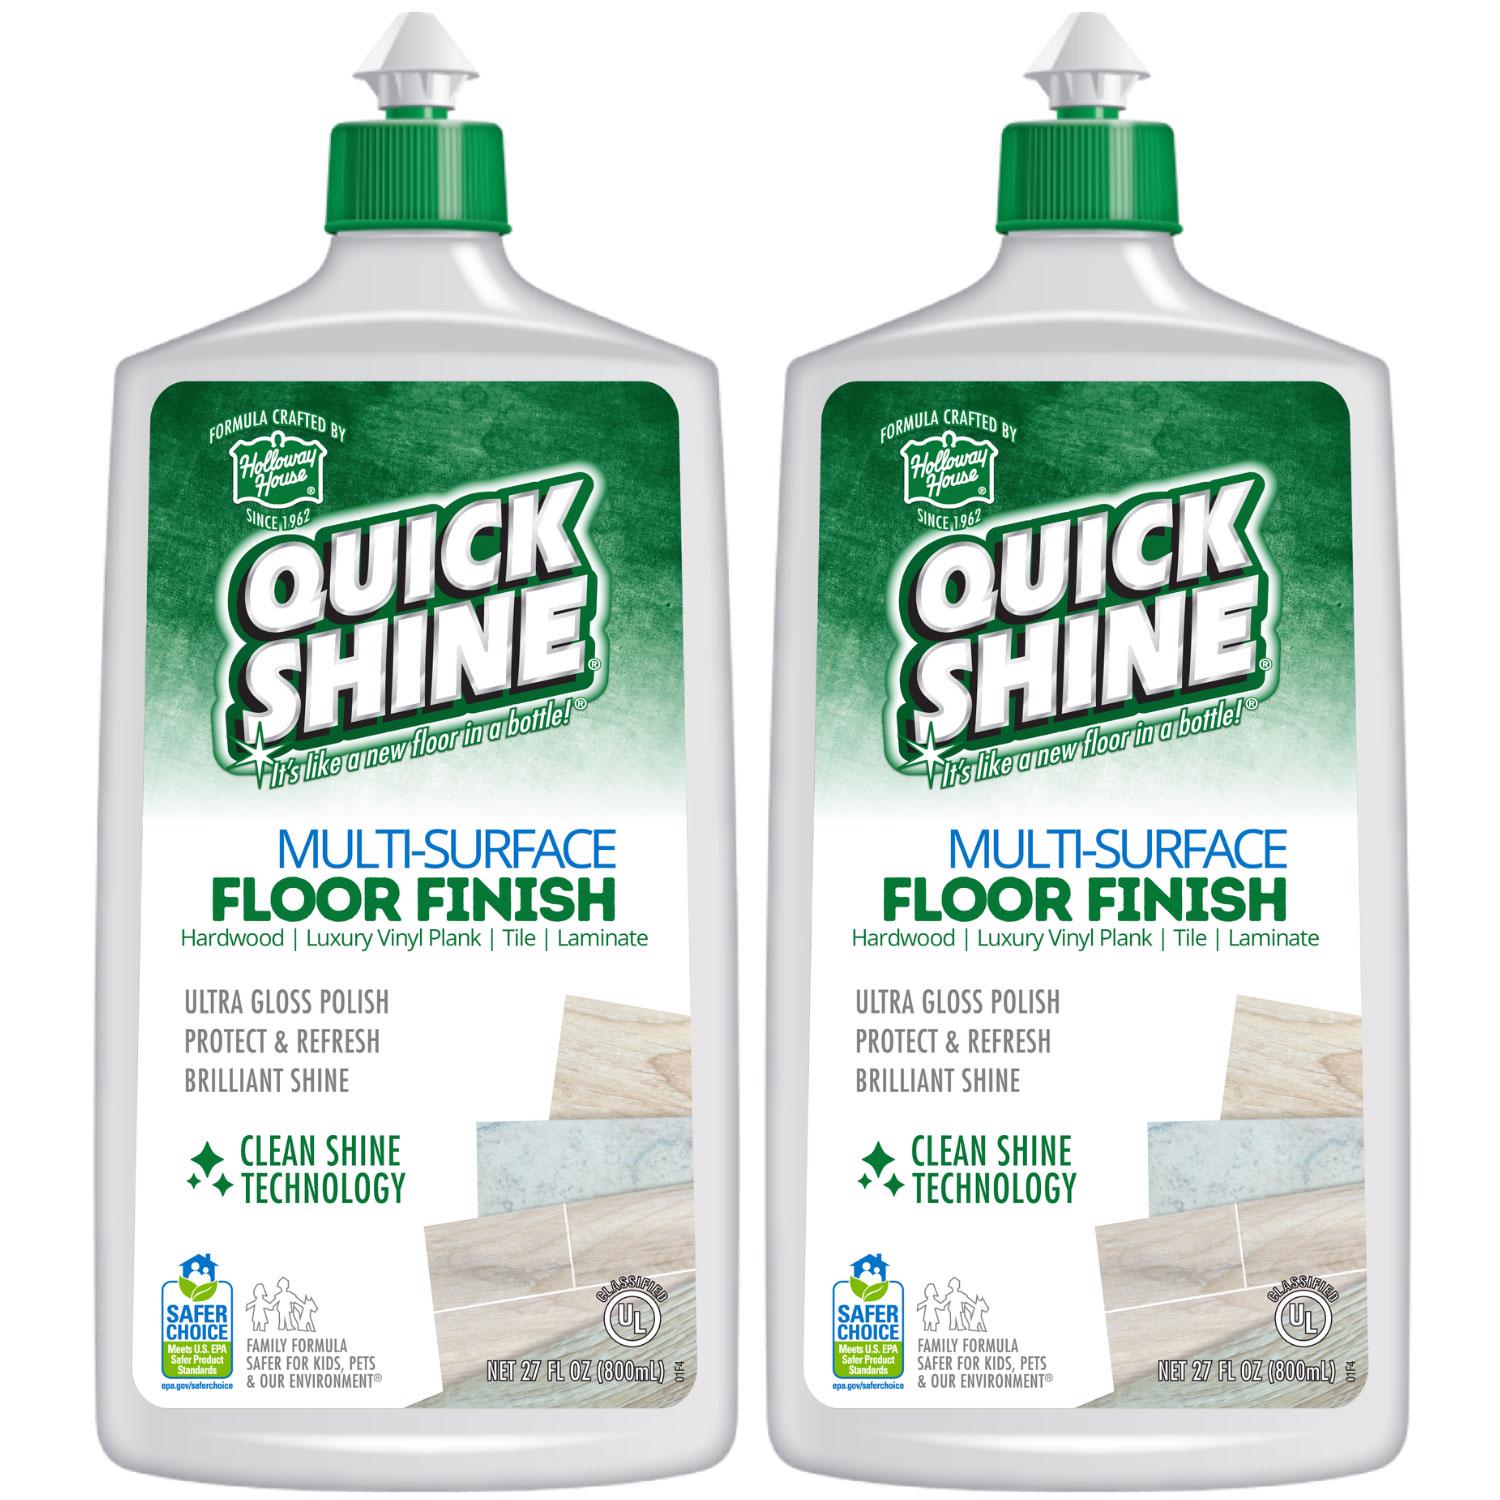 Quick Shine Gloss Floor Finish Liquid 27 oz